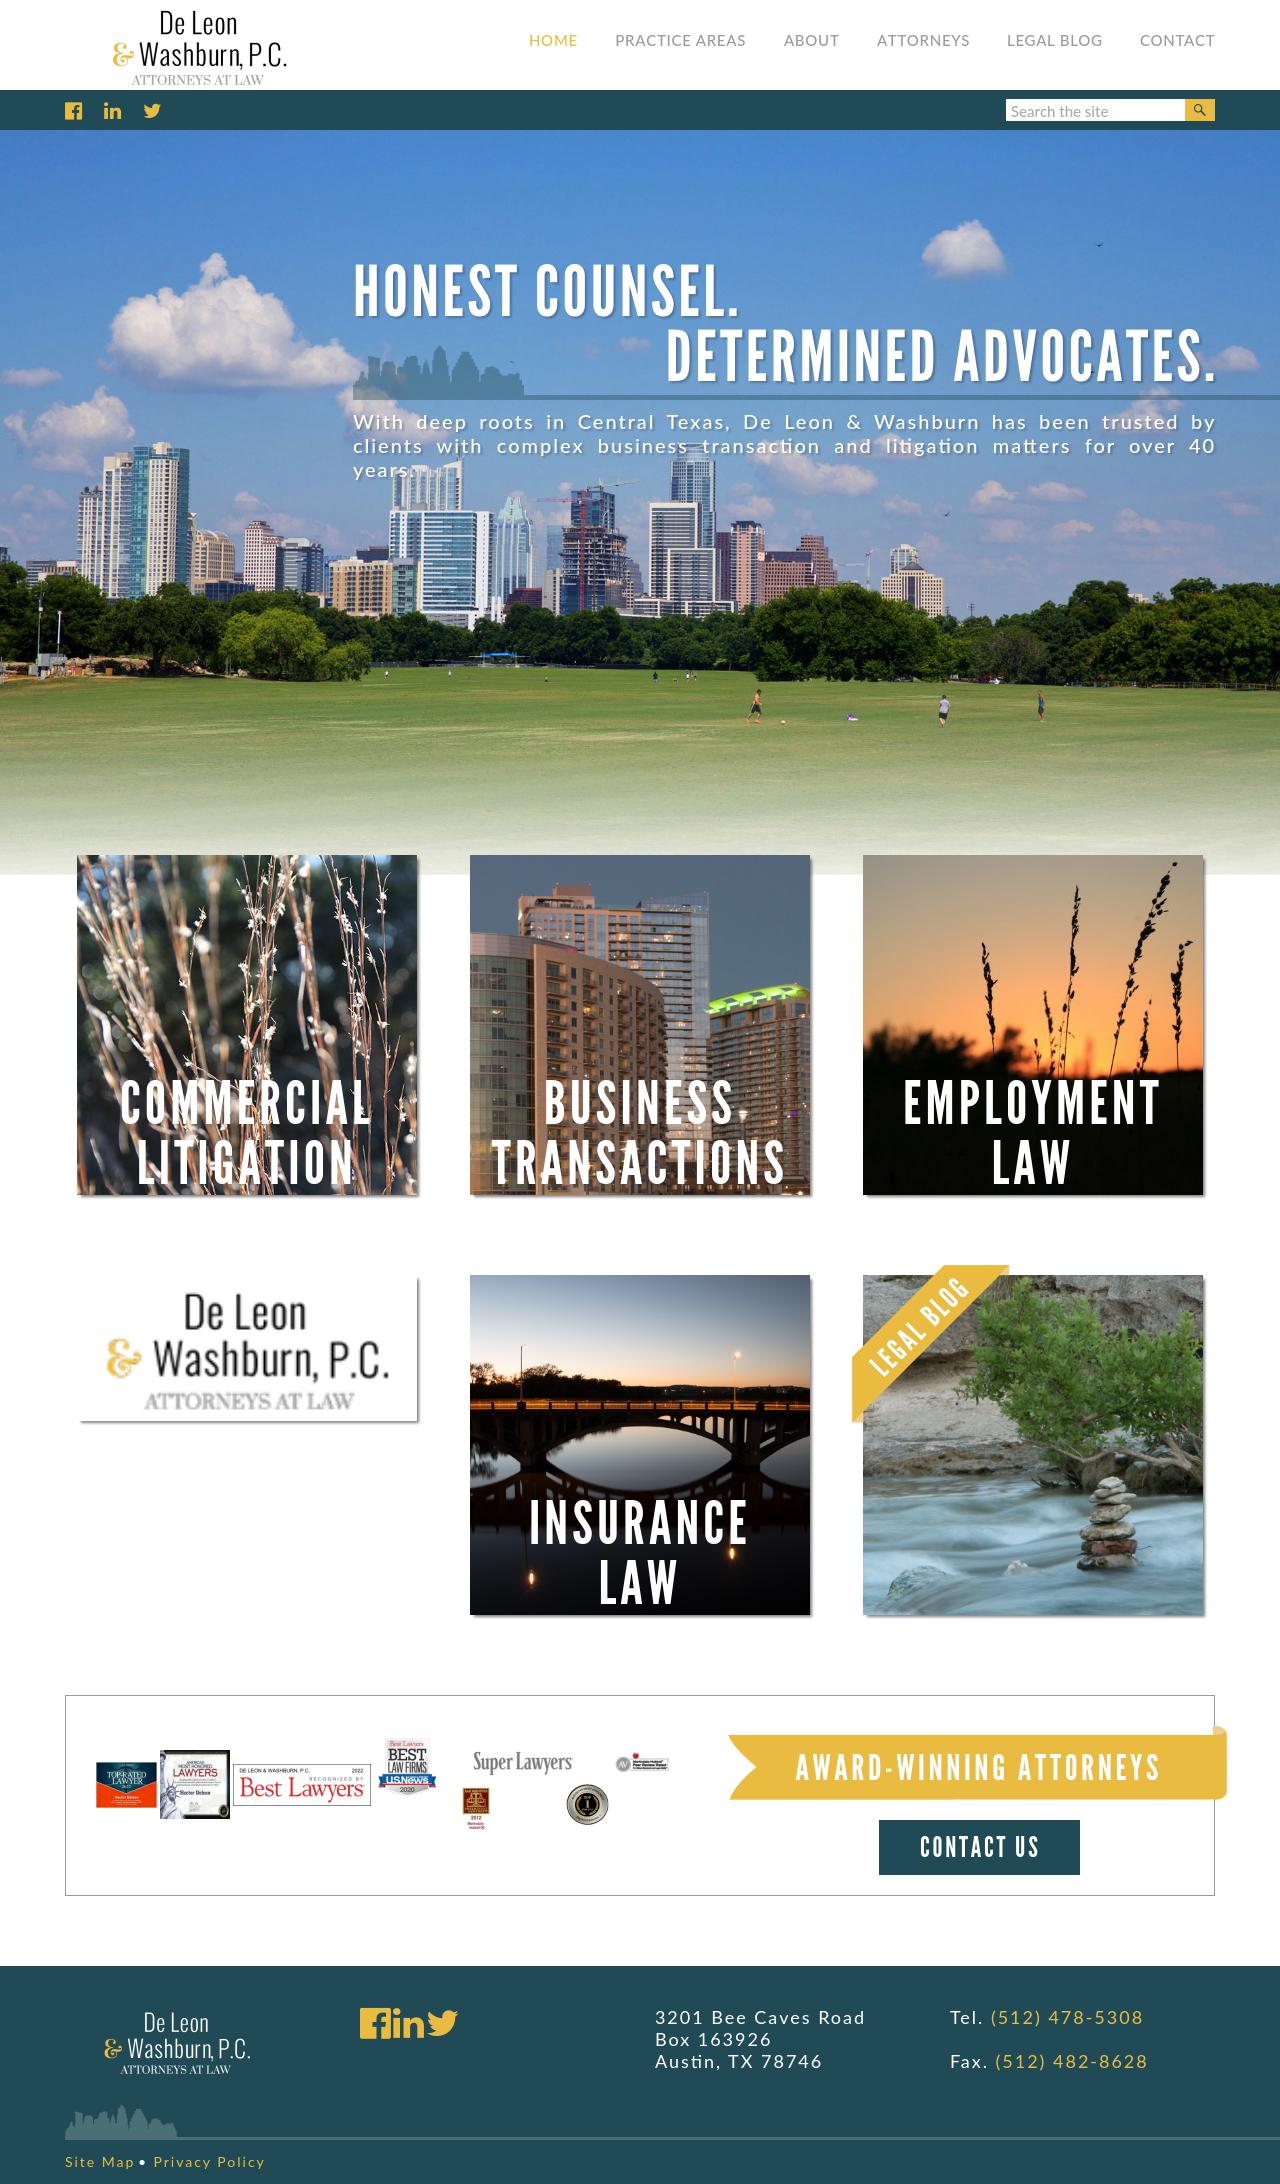 De Leon & Washburn - Austin TX Lawyers